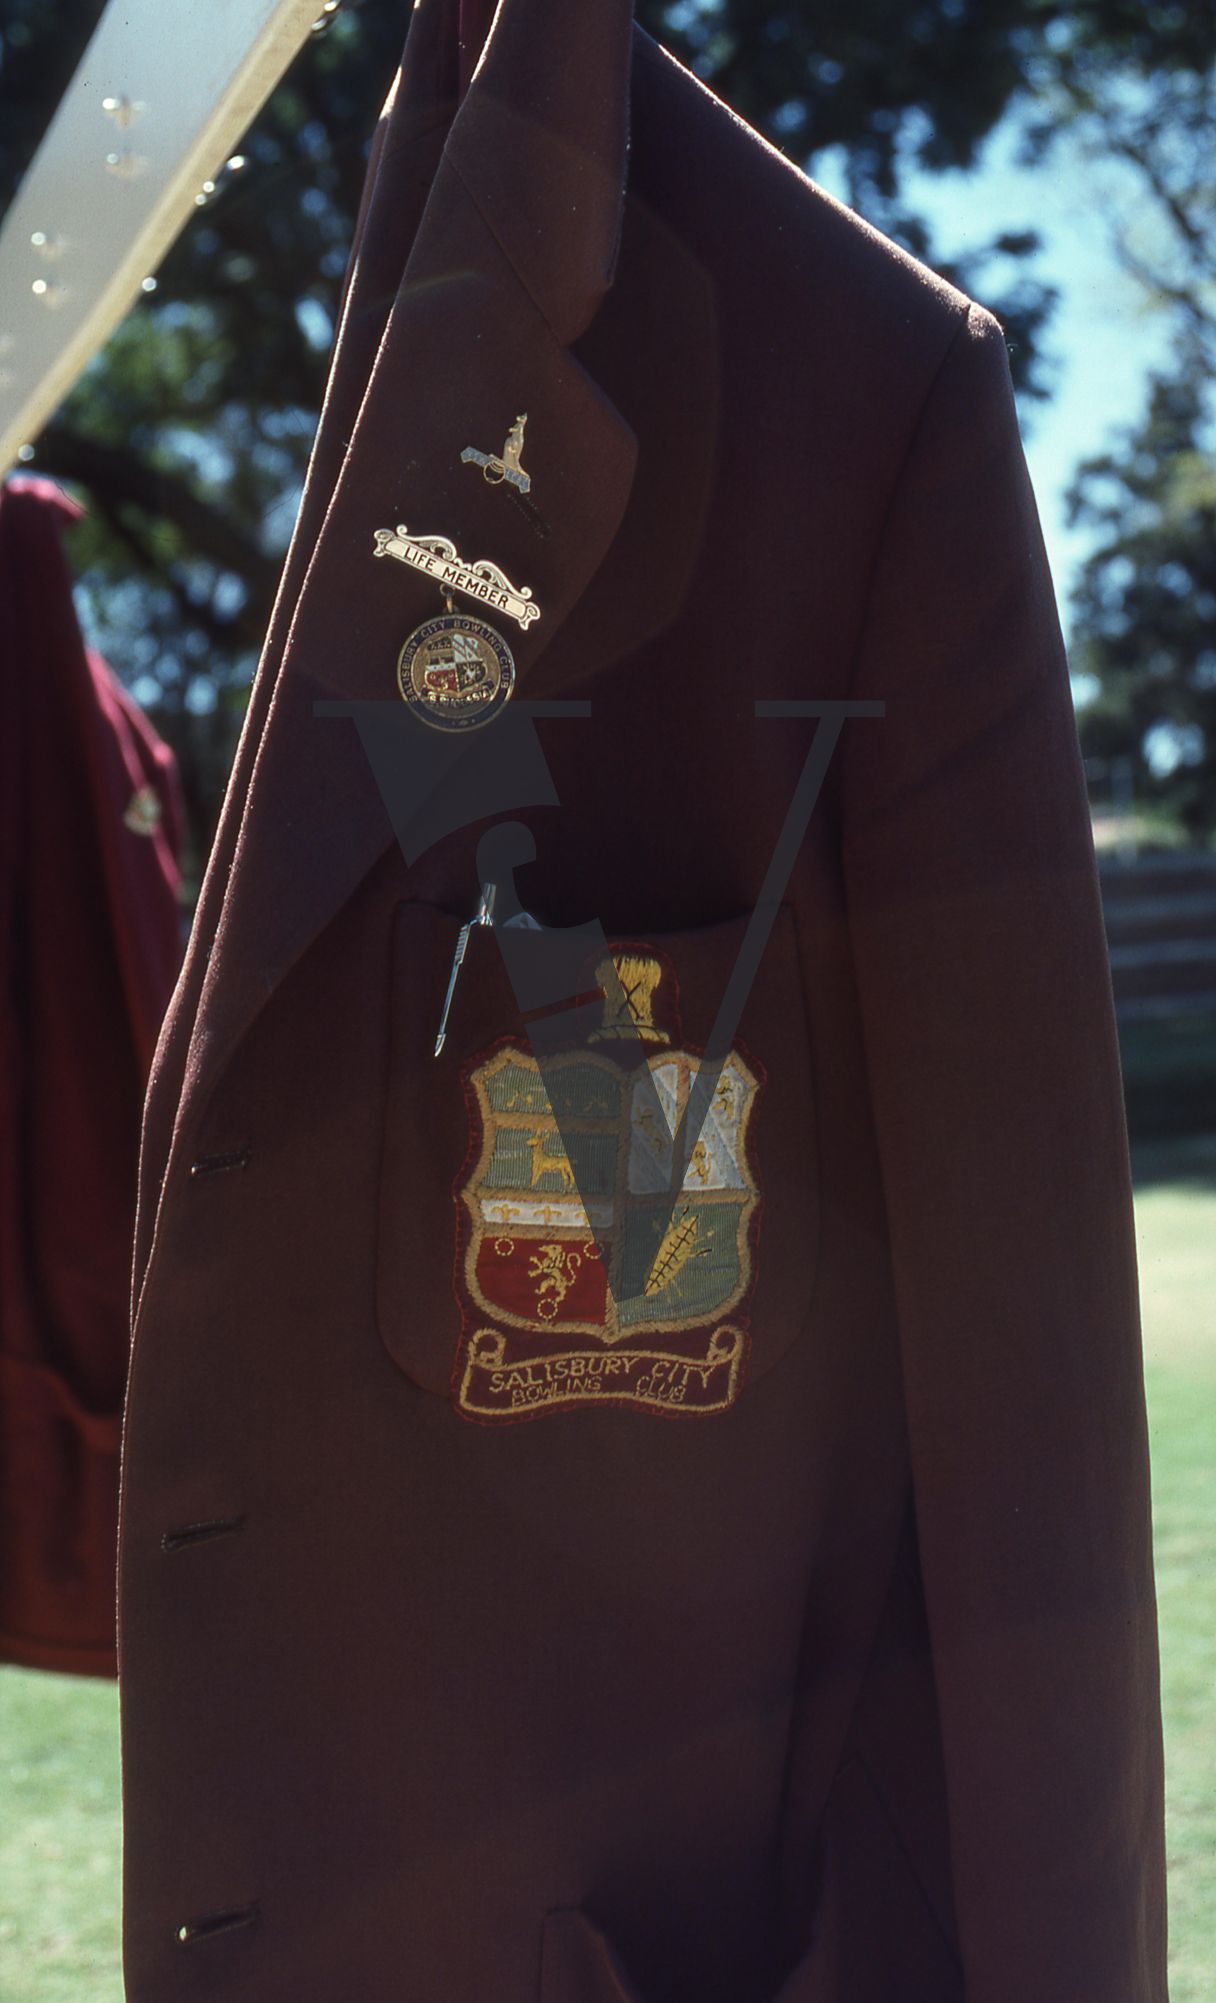 Rhodesia, Salisbury City Bowling Club, bowling jacket.